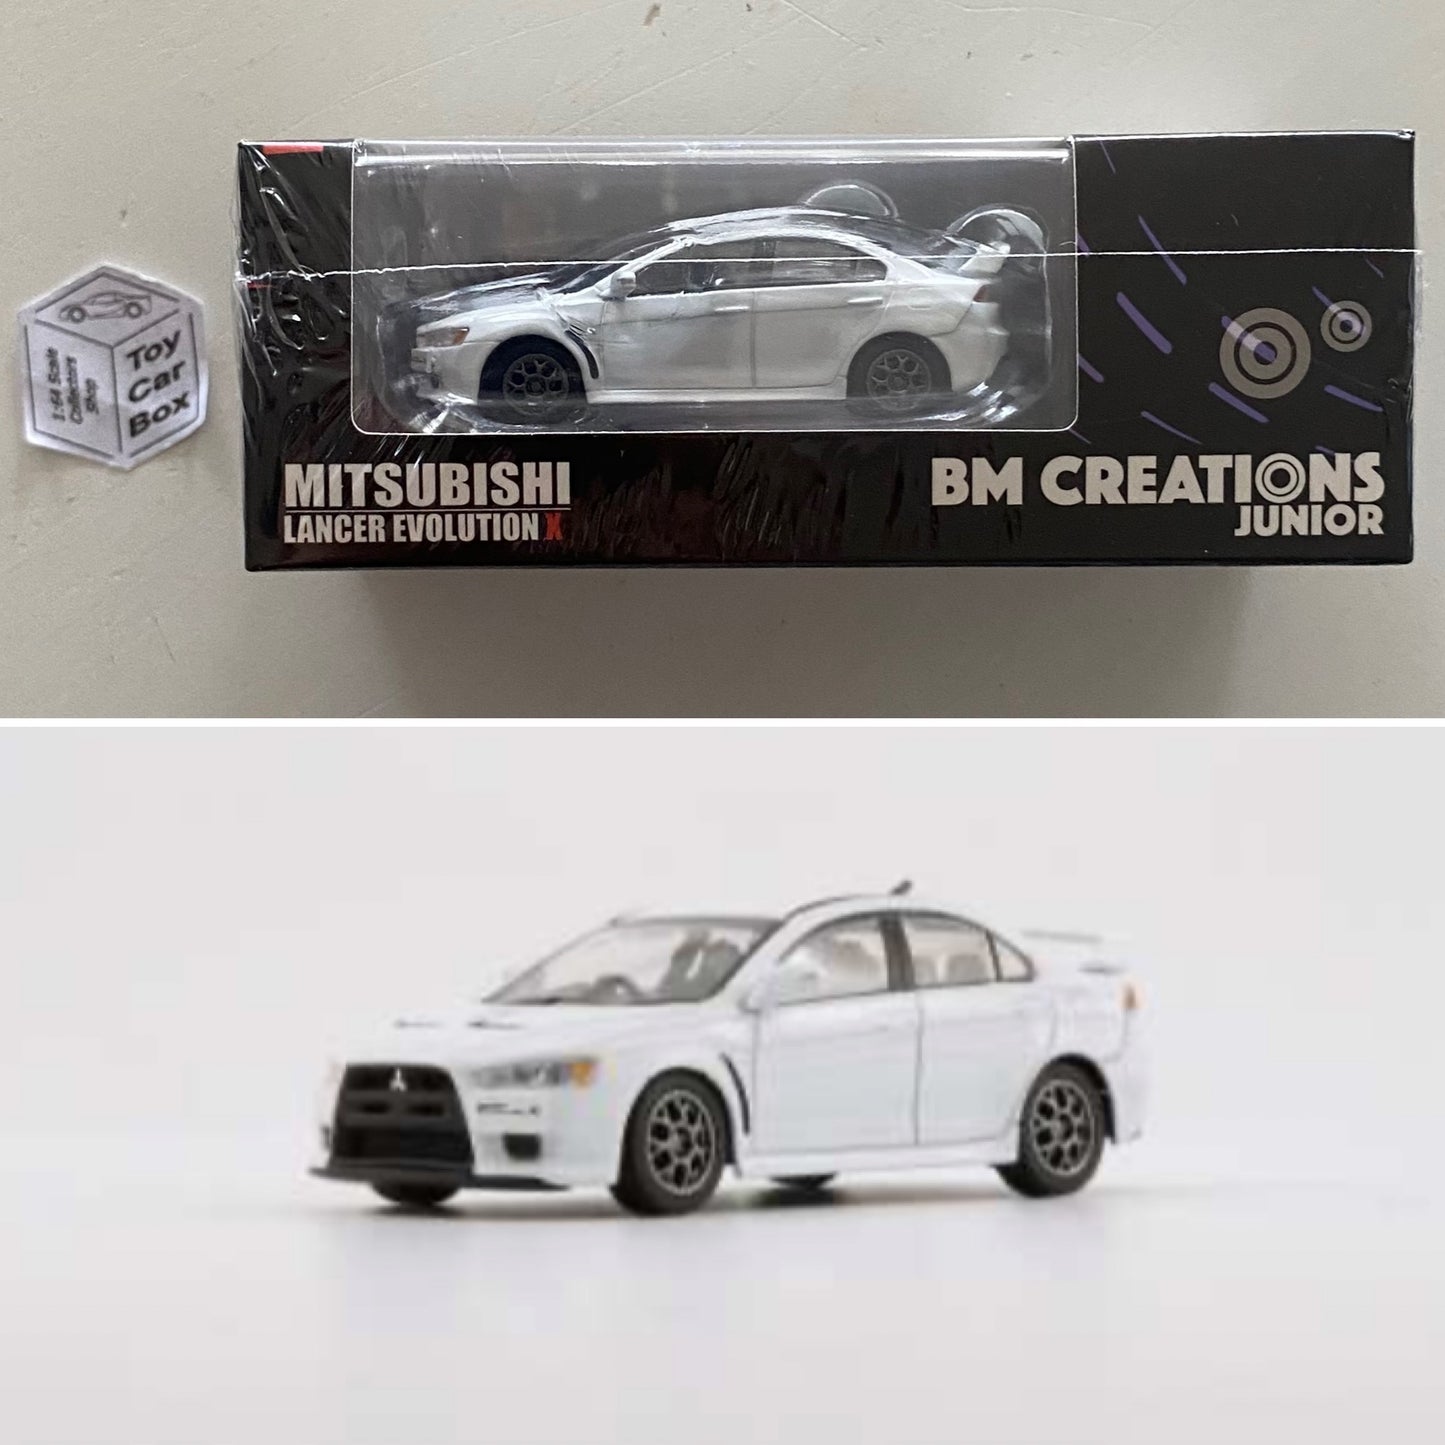 BM CREATIONS - Mitsubishi Lancer Evolution X (1:64 Scale - White - RHD) N66